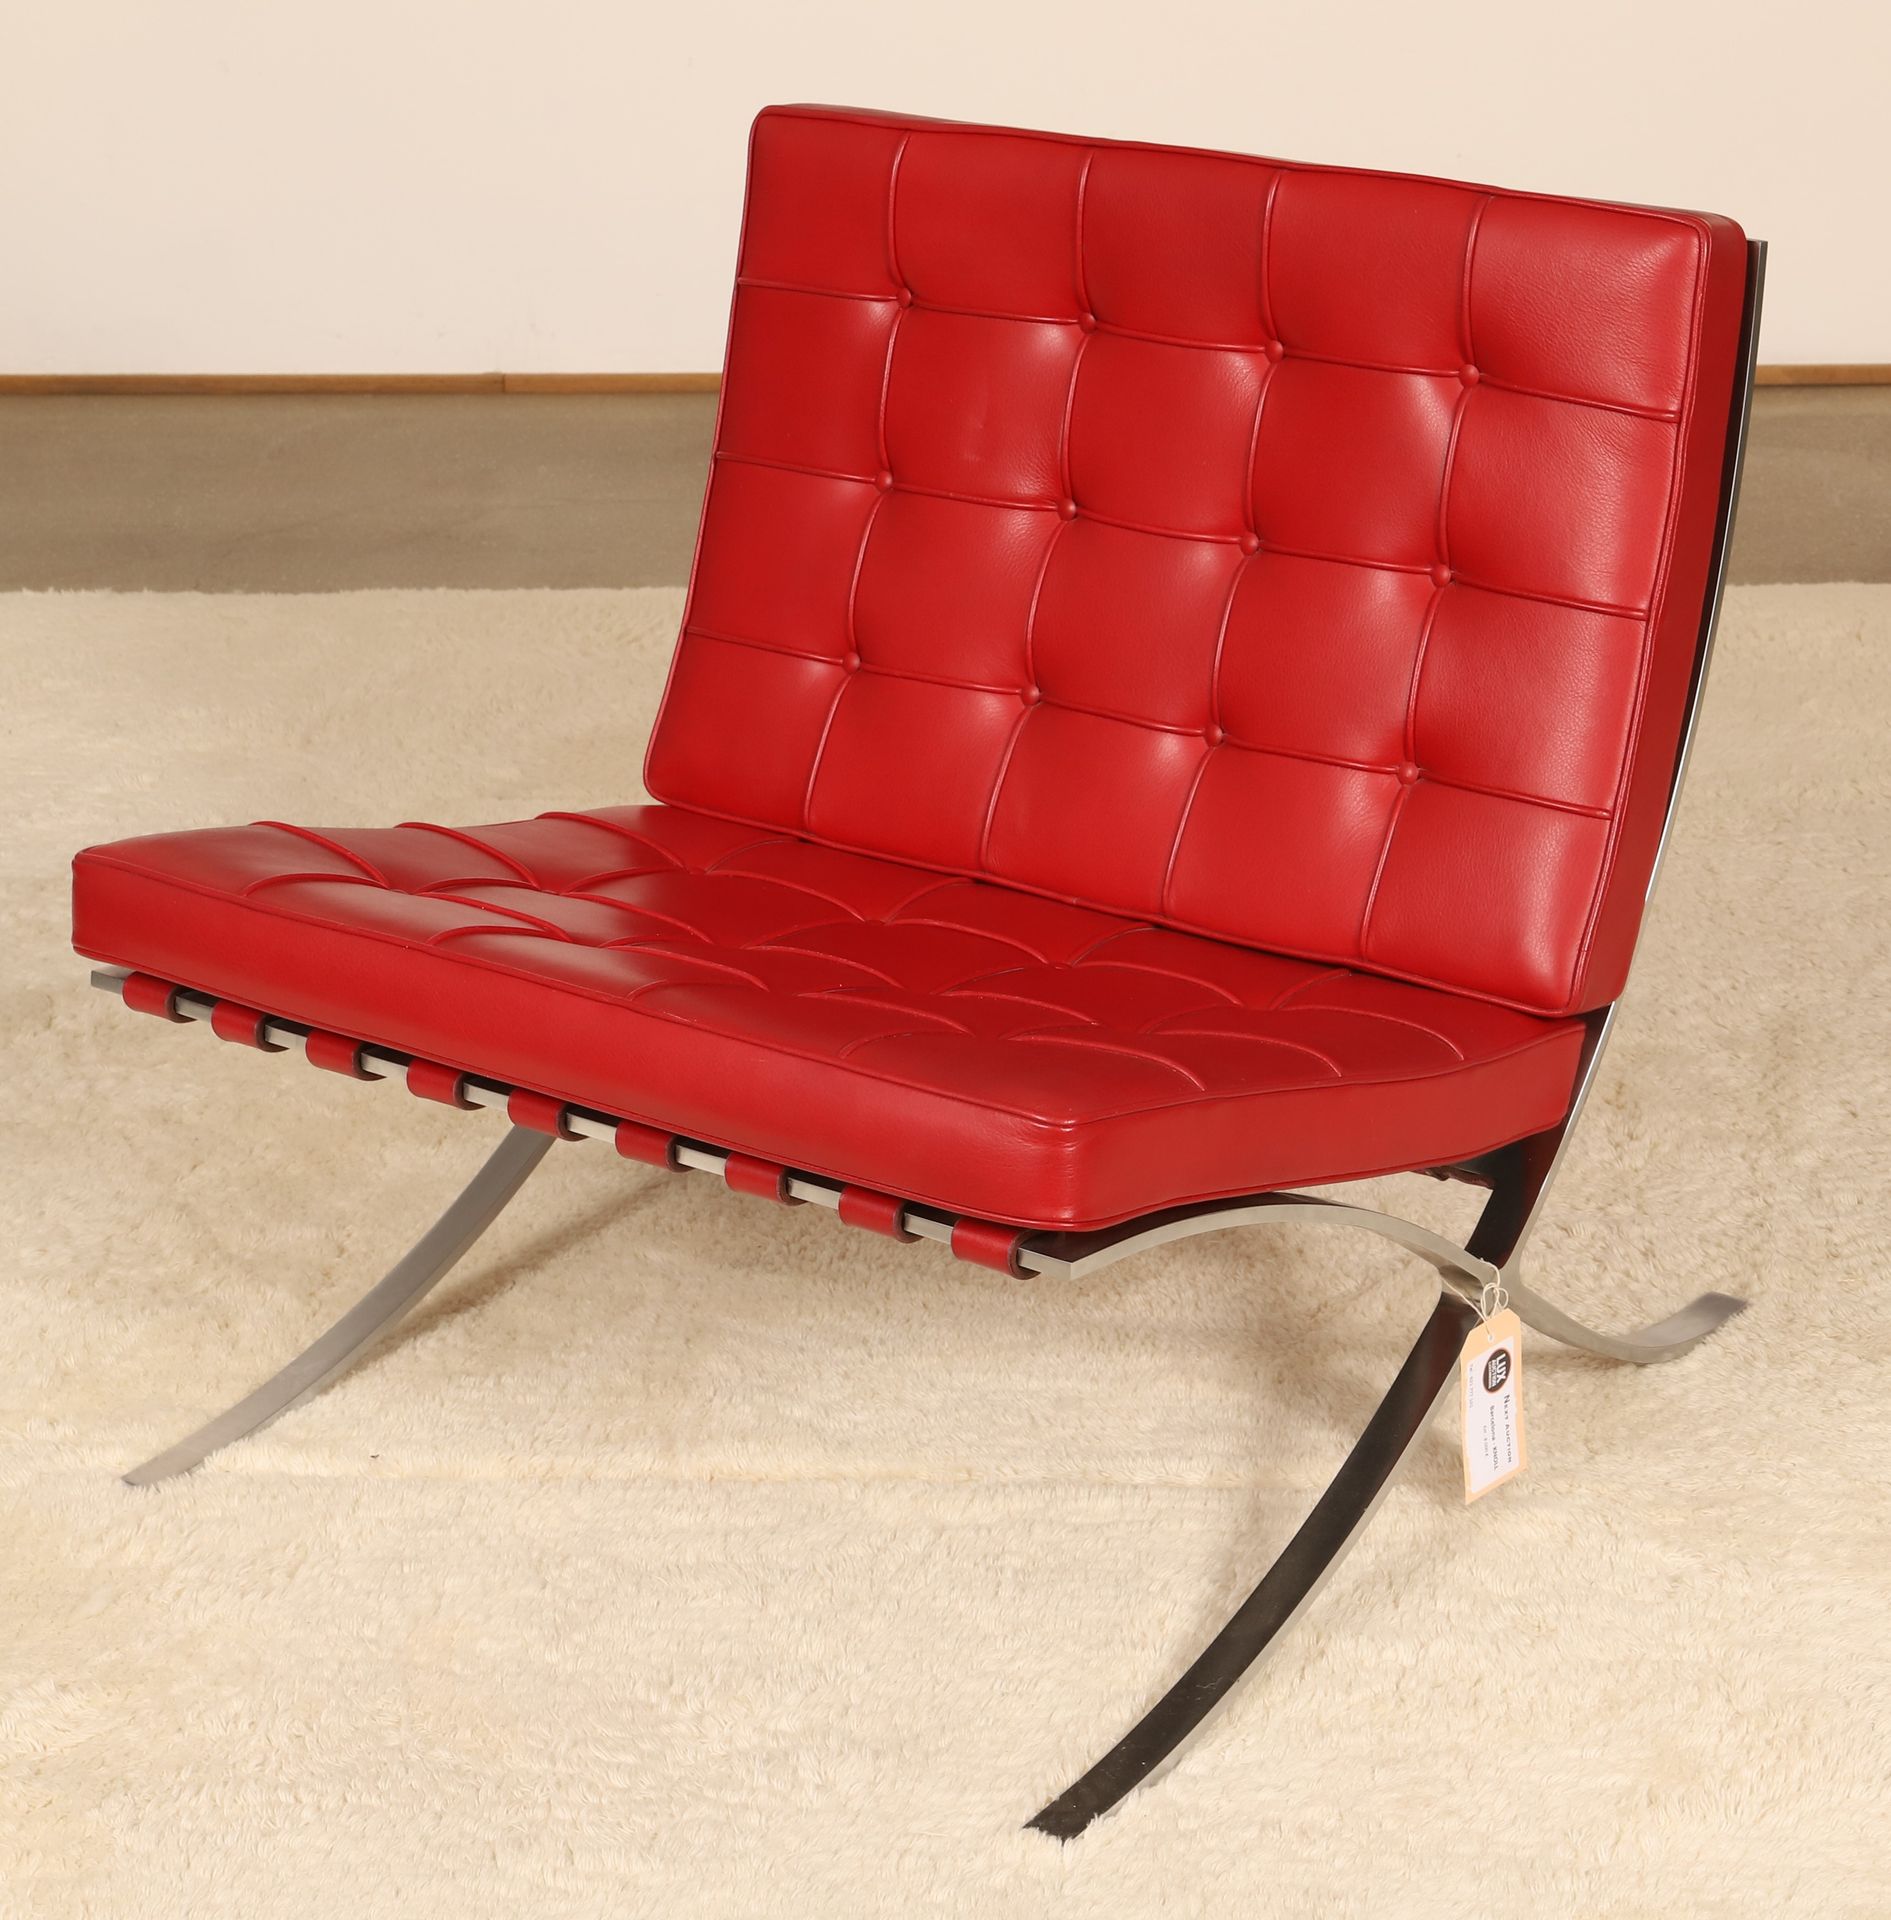 Null 路德维希-密斯-凡-德-罗设计的特殊的 "BARCELONA "扶手椅 - Knoll出版社

德国设计师和建筑师。

缎面镀铬金属框架，"X "形腿&hellip;